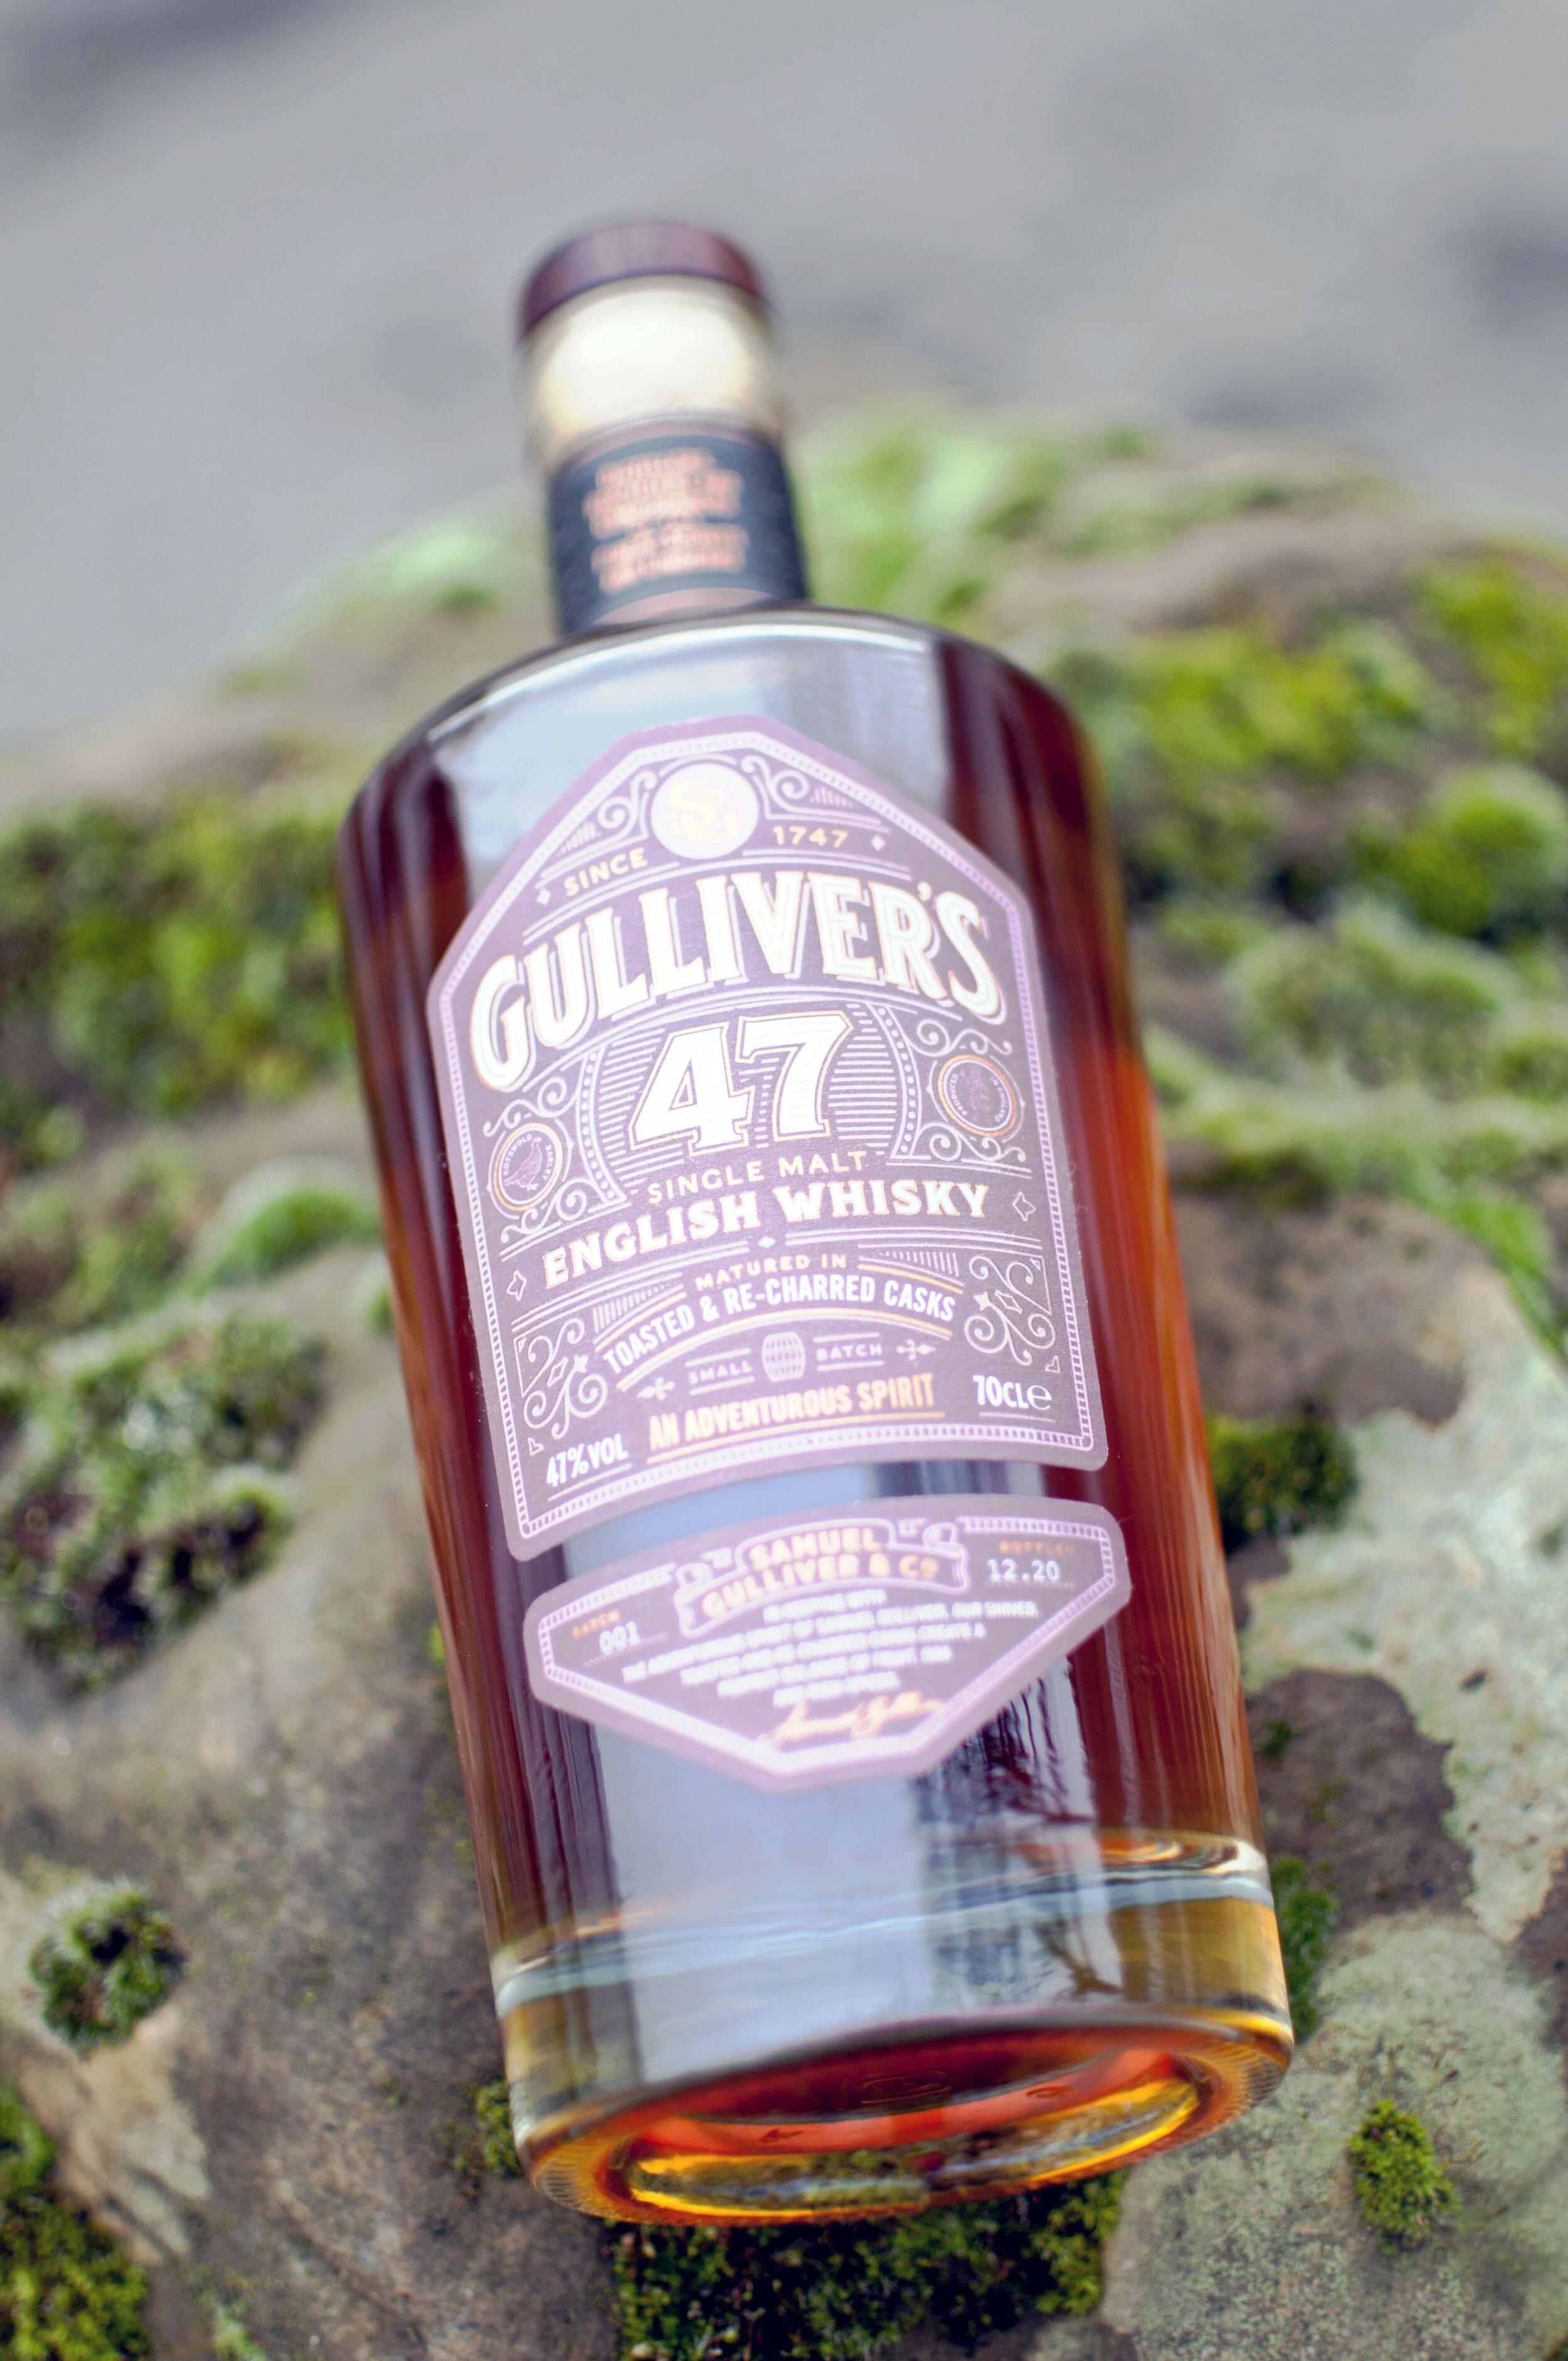 Gullivers Whisky